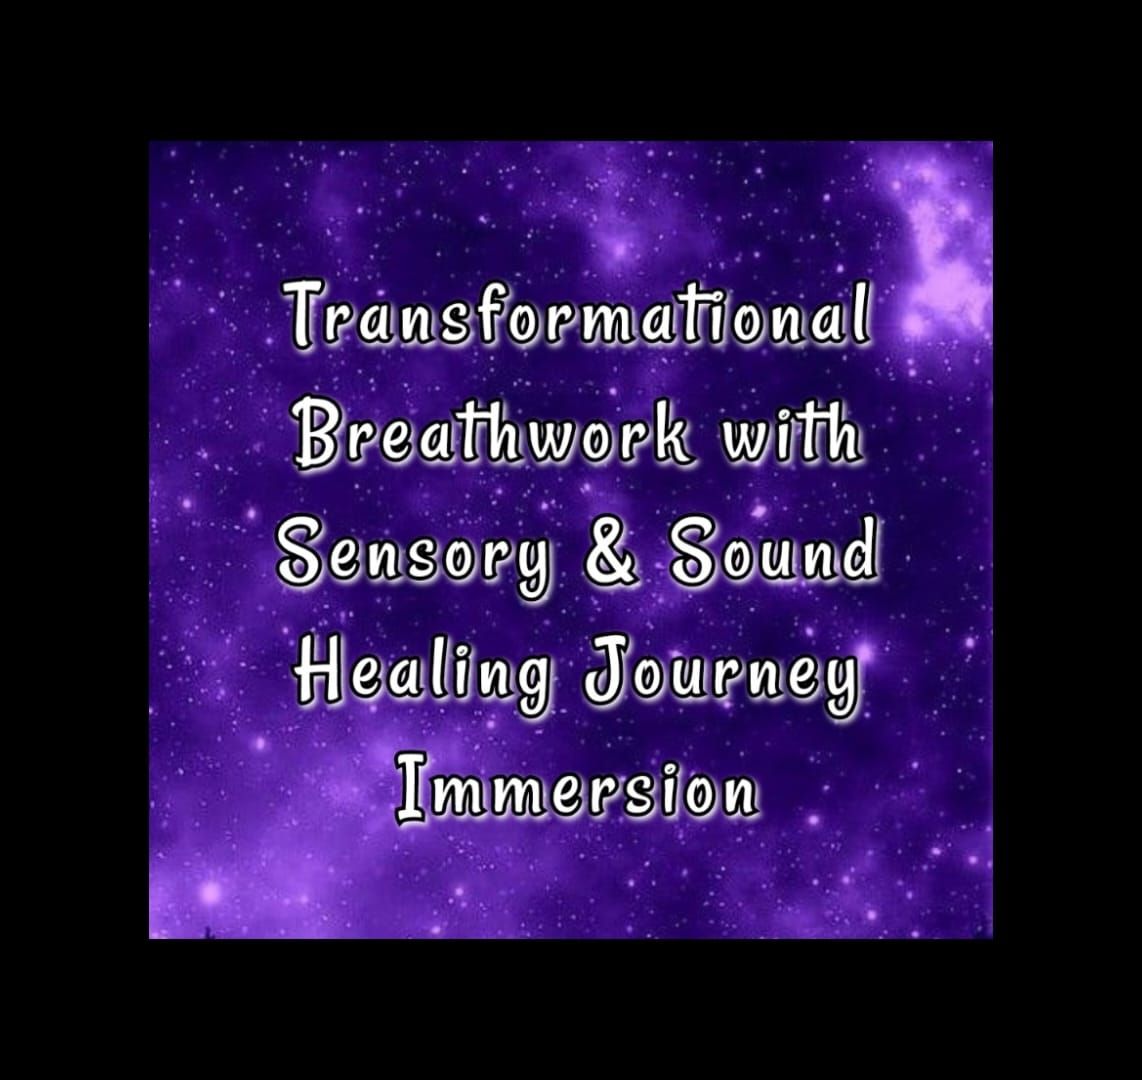 Transformational Breathwork with Sensory & Sound Healing Journey Immersion